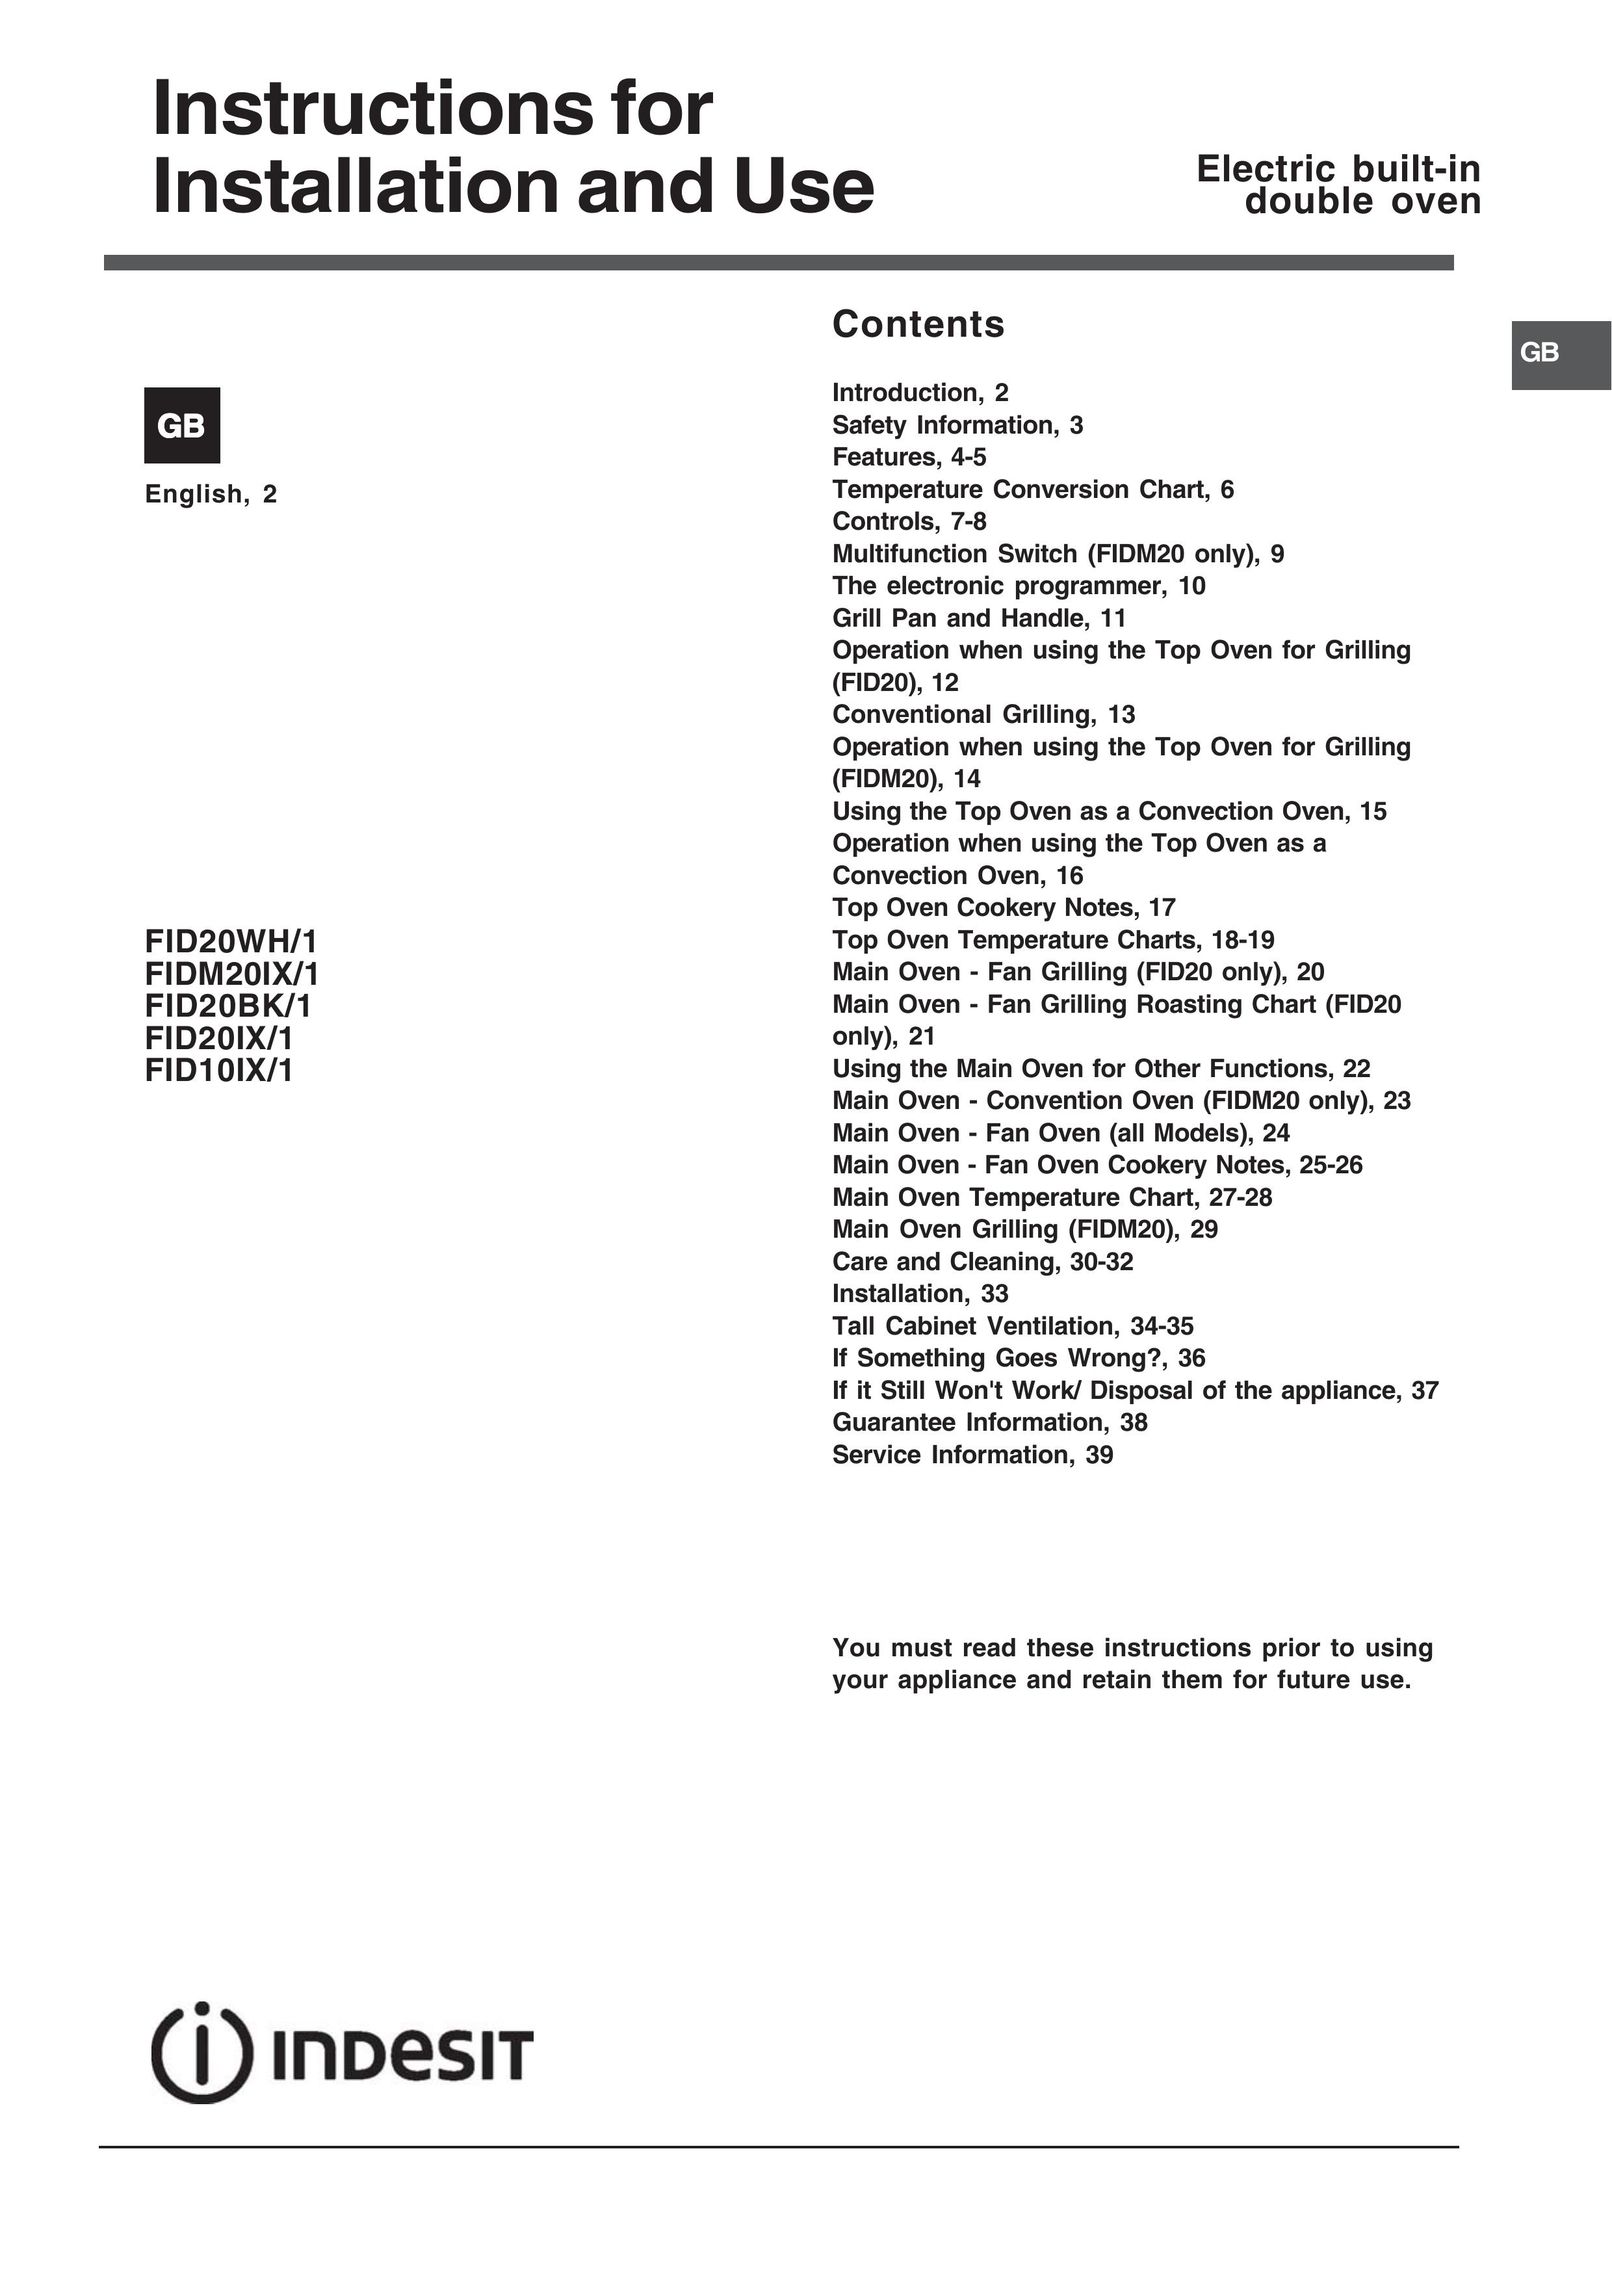 Indesit FID20IX/1 Double Oven User Manual